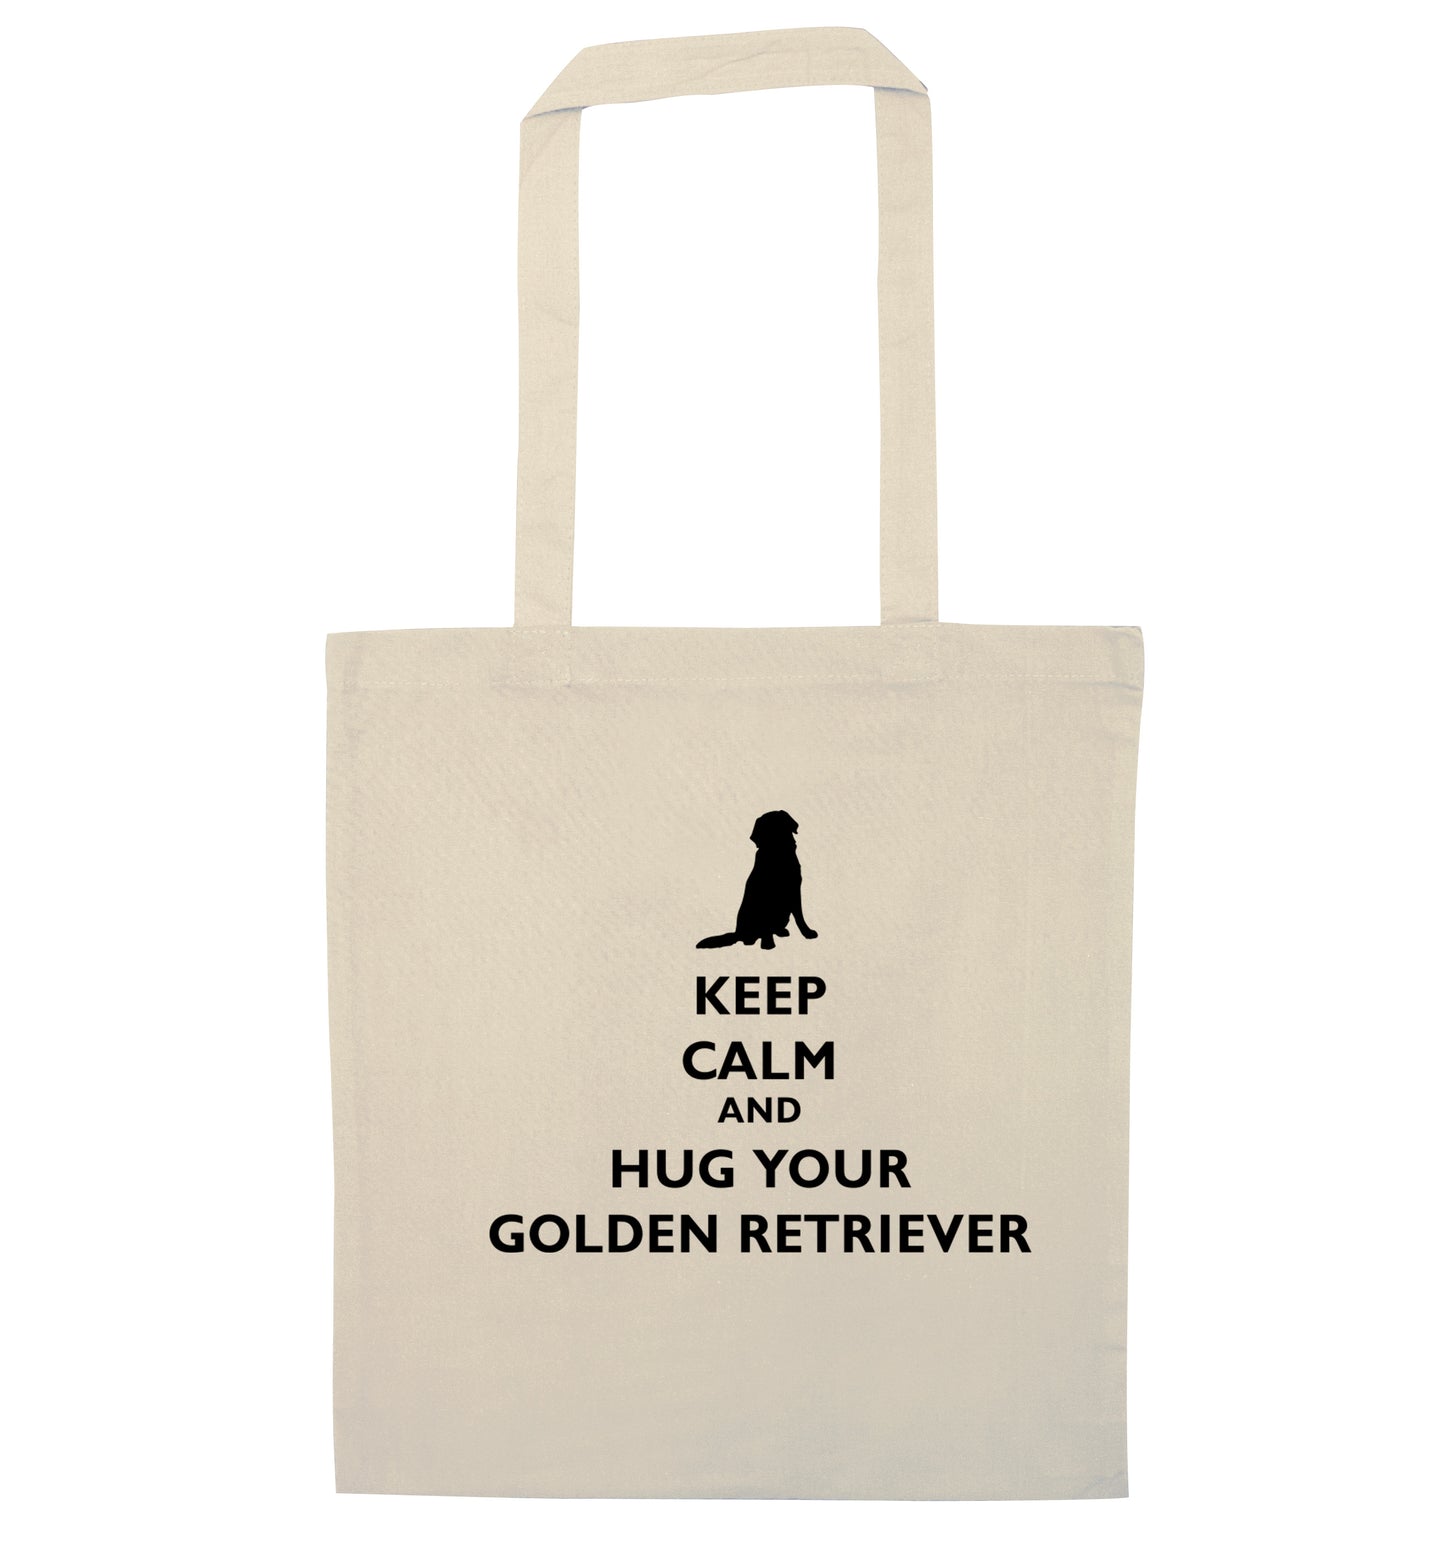 Keep calm and hug your golden retriever natural tote bag